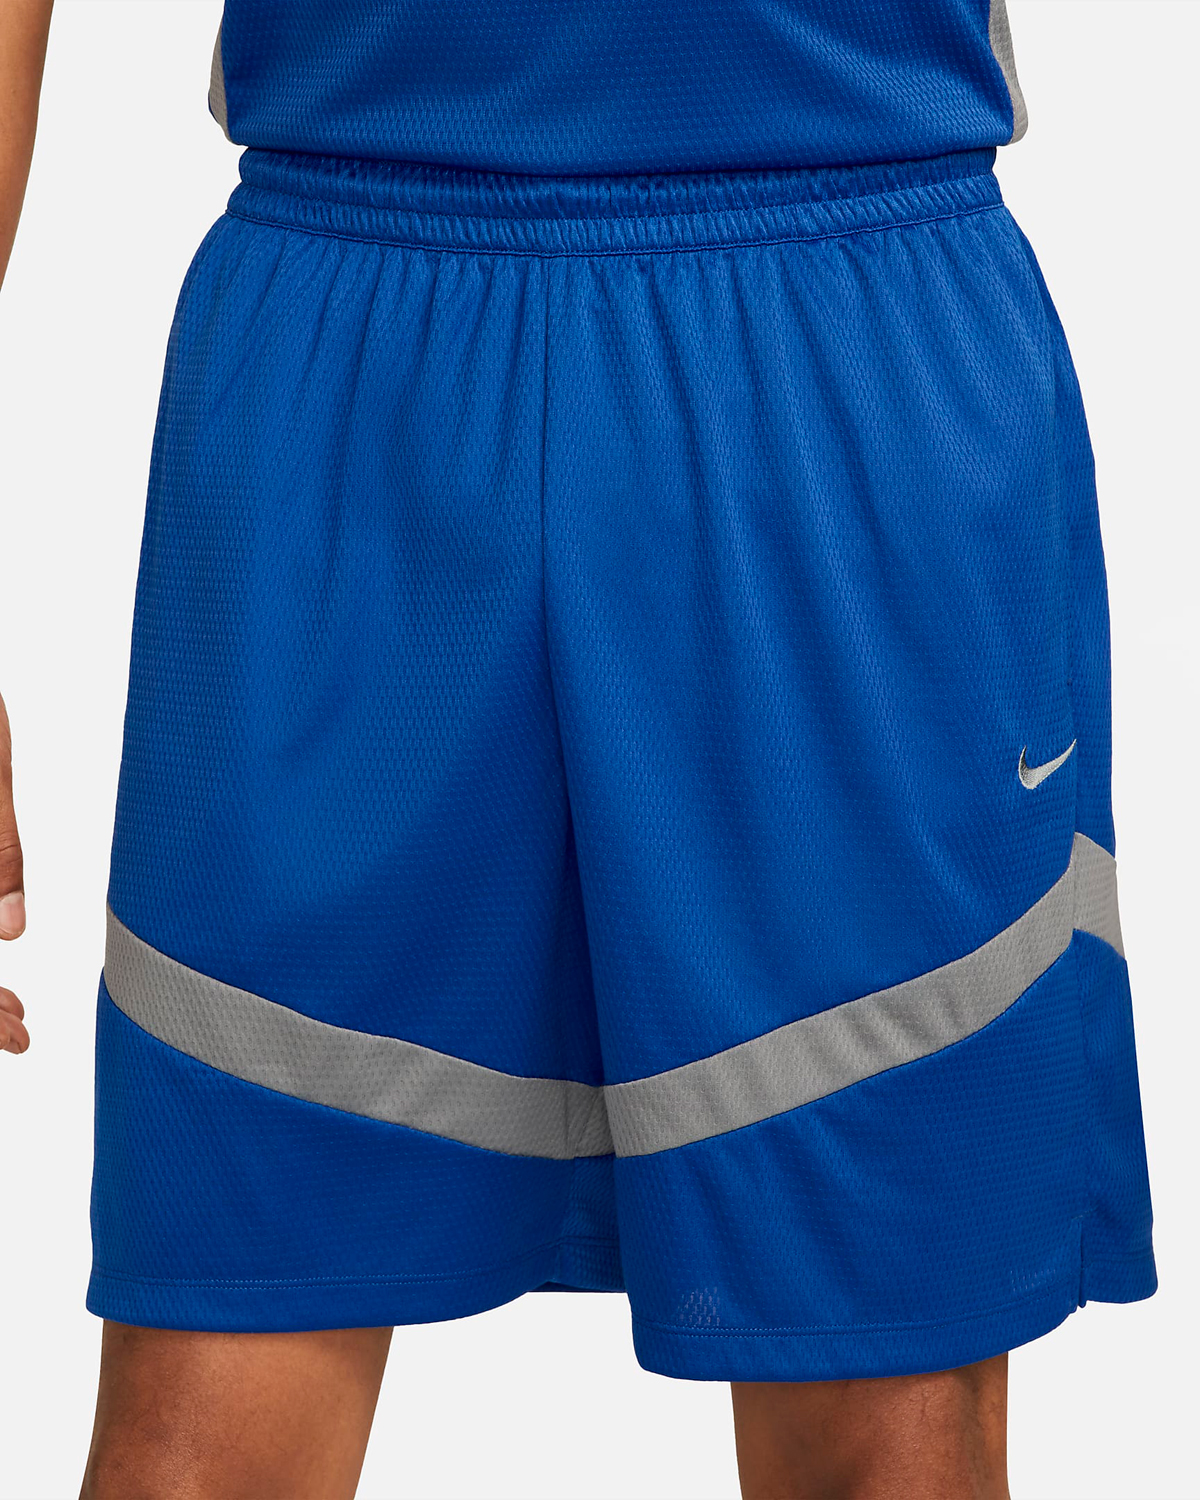 Nike-Icon-Basketball-Shorts-Game-Royal-Cool-Grey-2